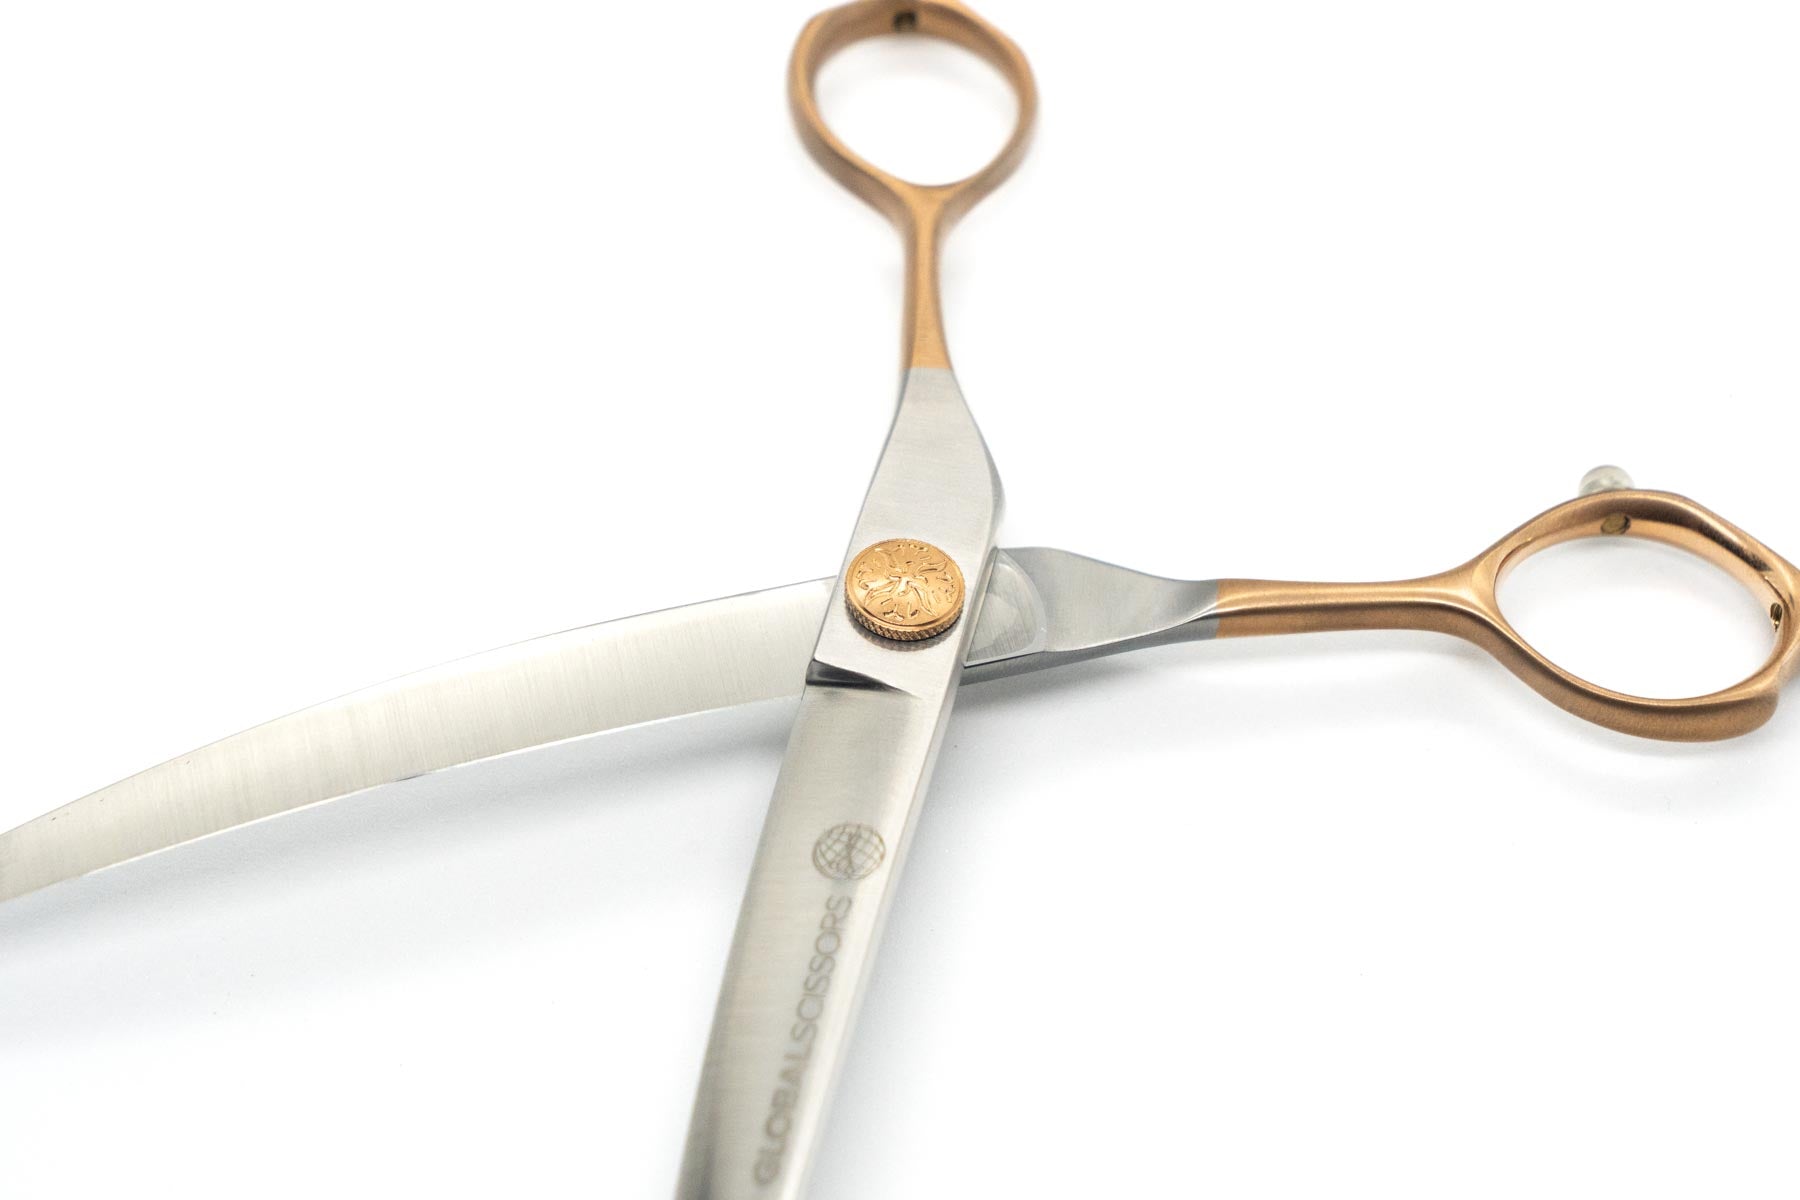 Aspen Lt Rose Gold Pet Grooming 7.5 inch Curved Cutting Scissor